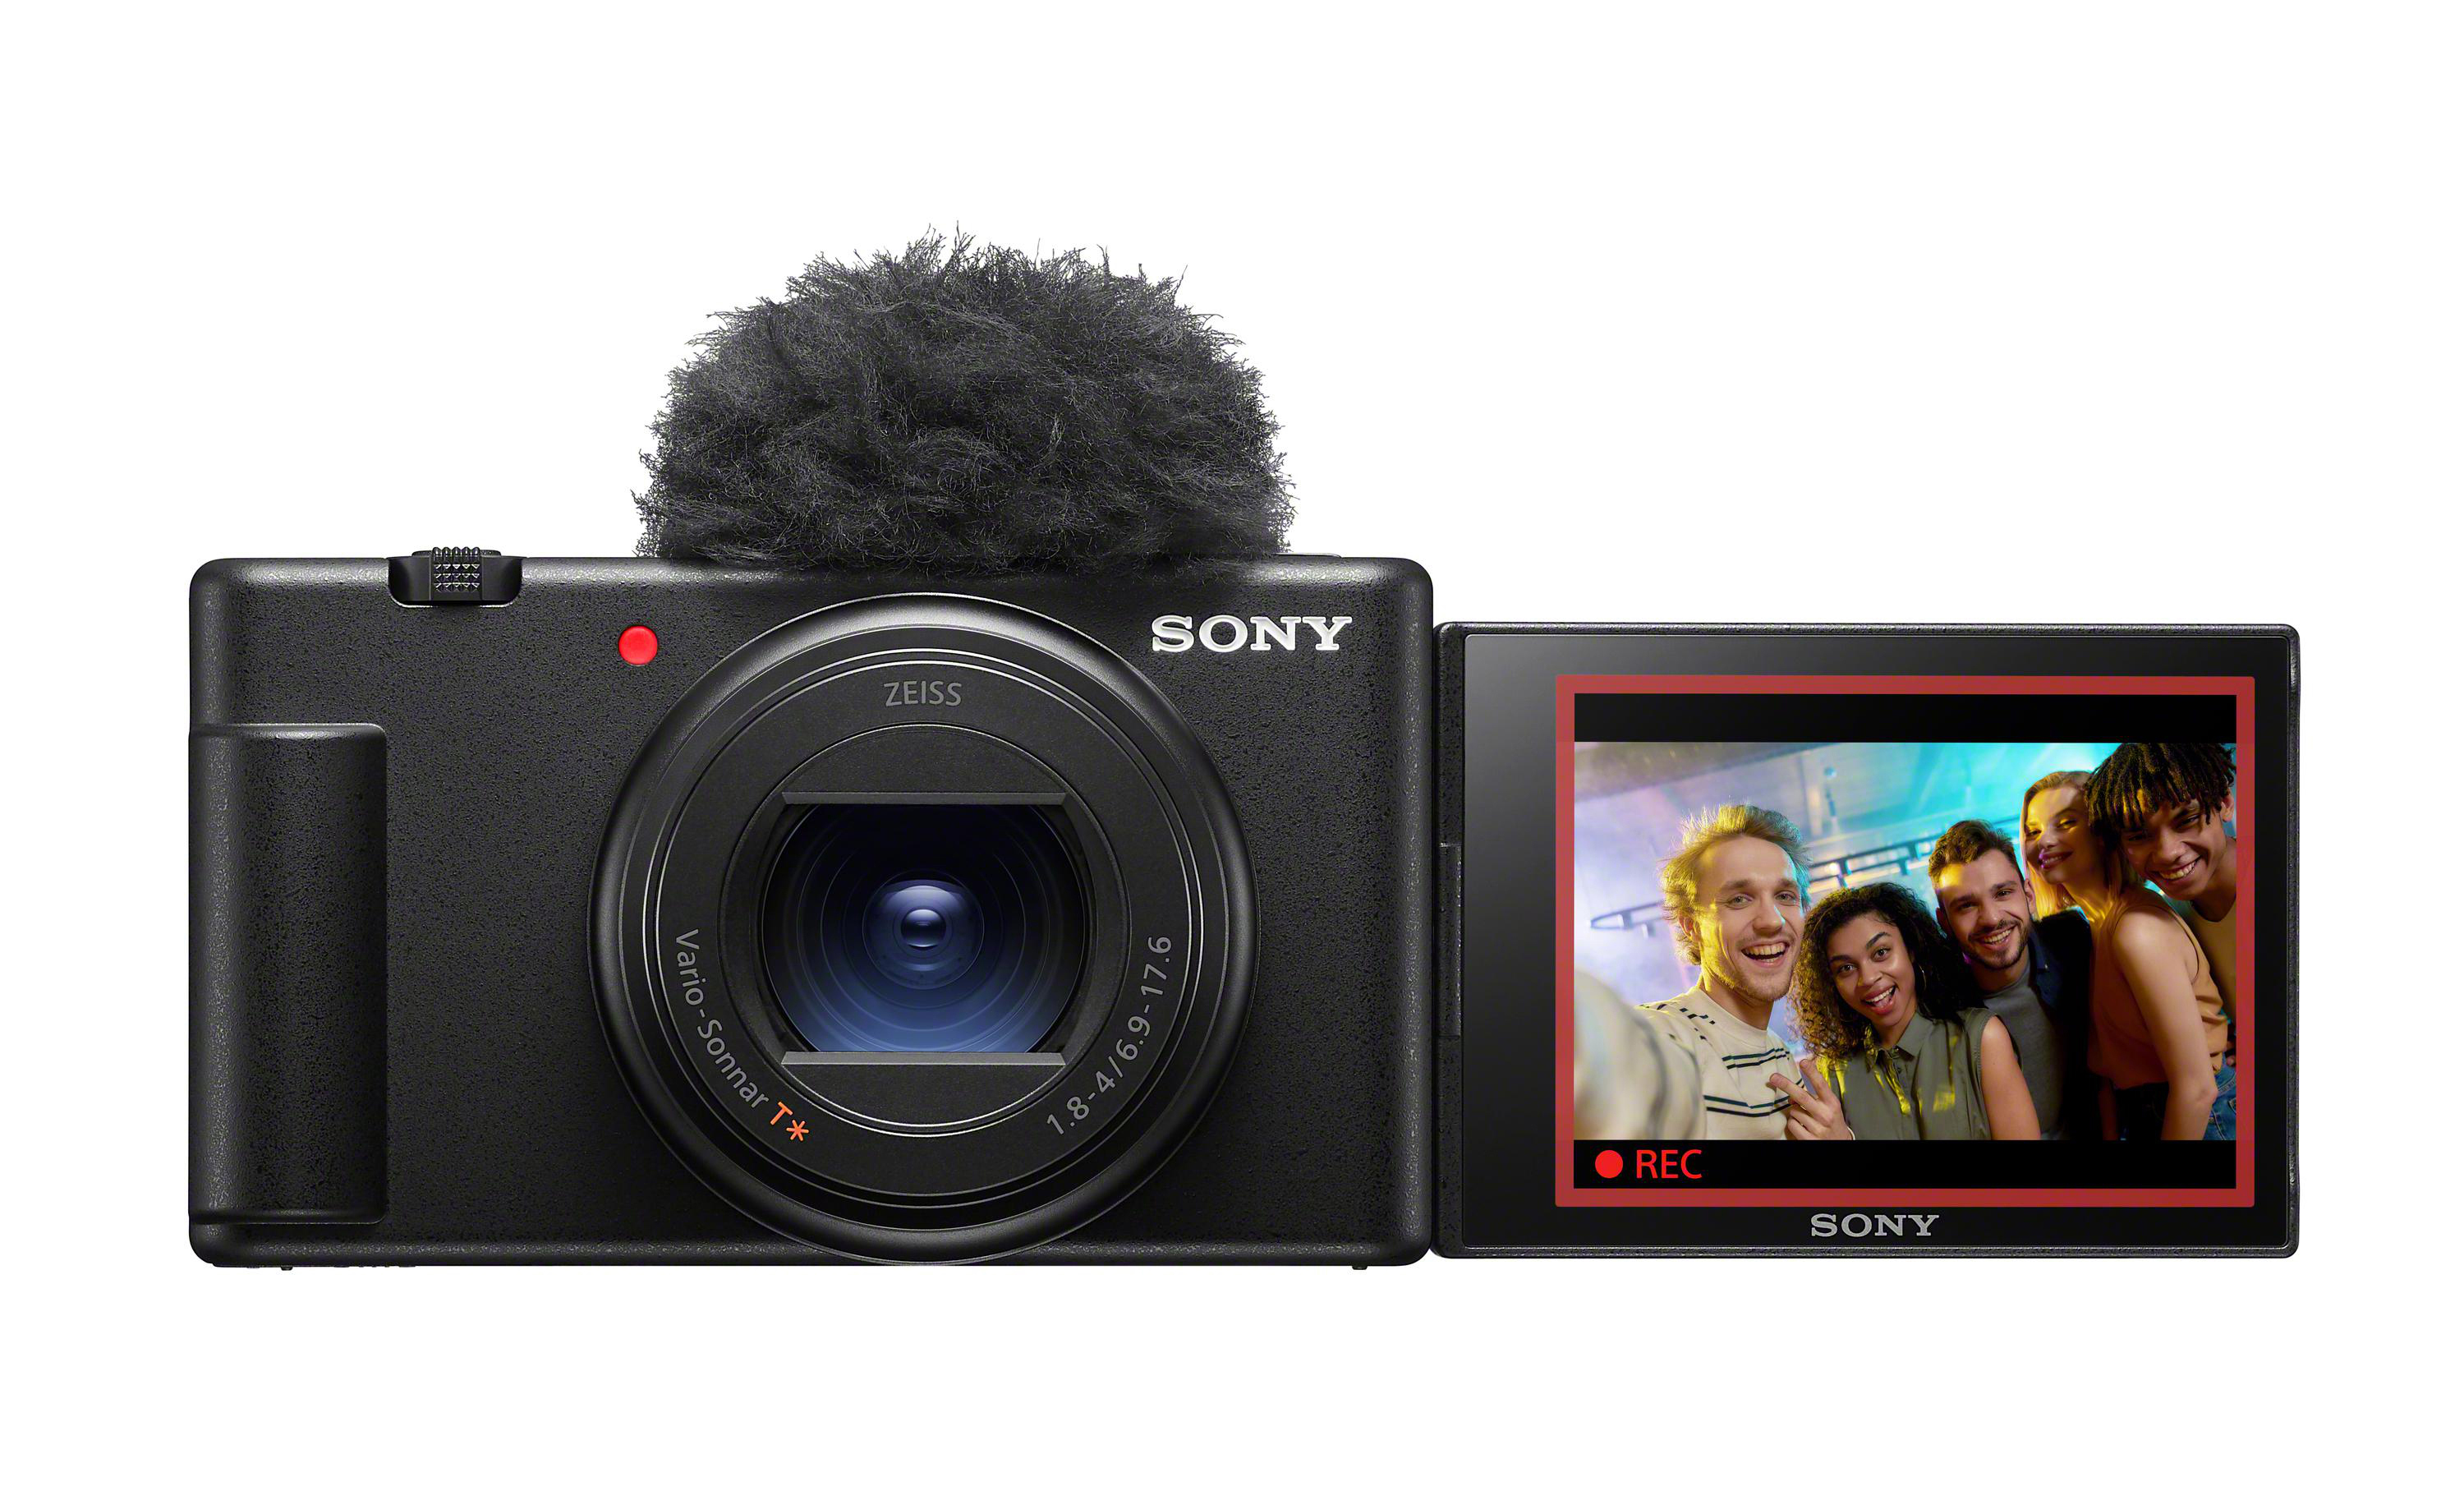 Schwarz, Zoom, Digitalkamera Selfie-Touchdisplay, opt. SONY Xtra WLAN Fine ZV-1 Vlog II 2.7x